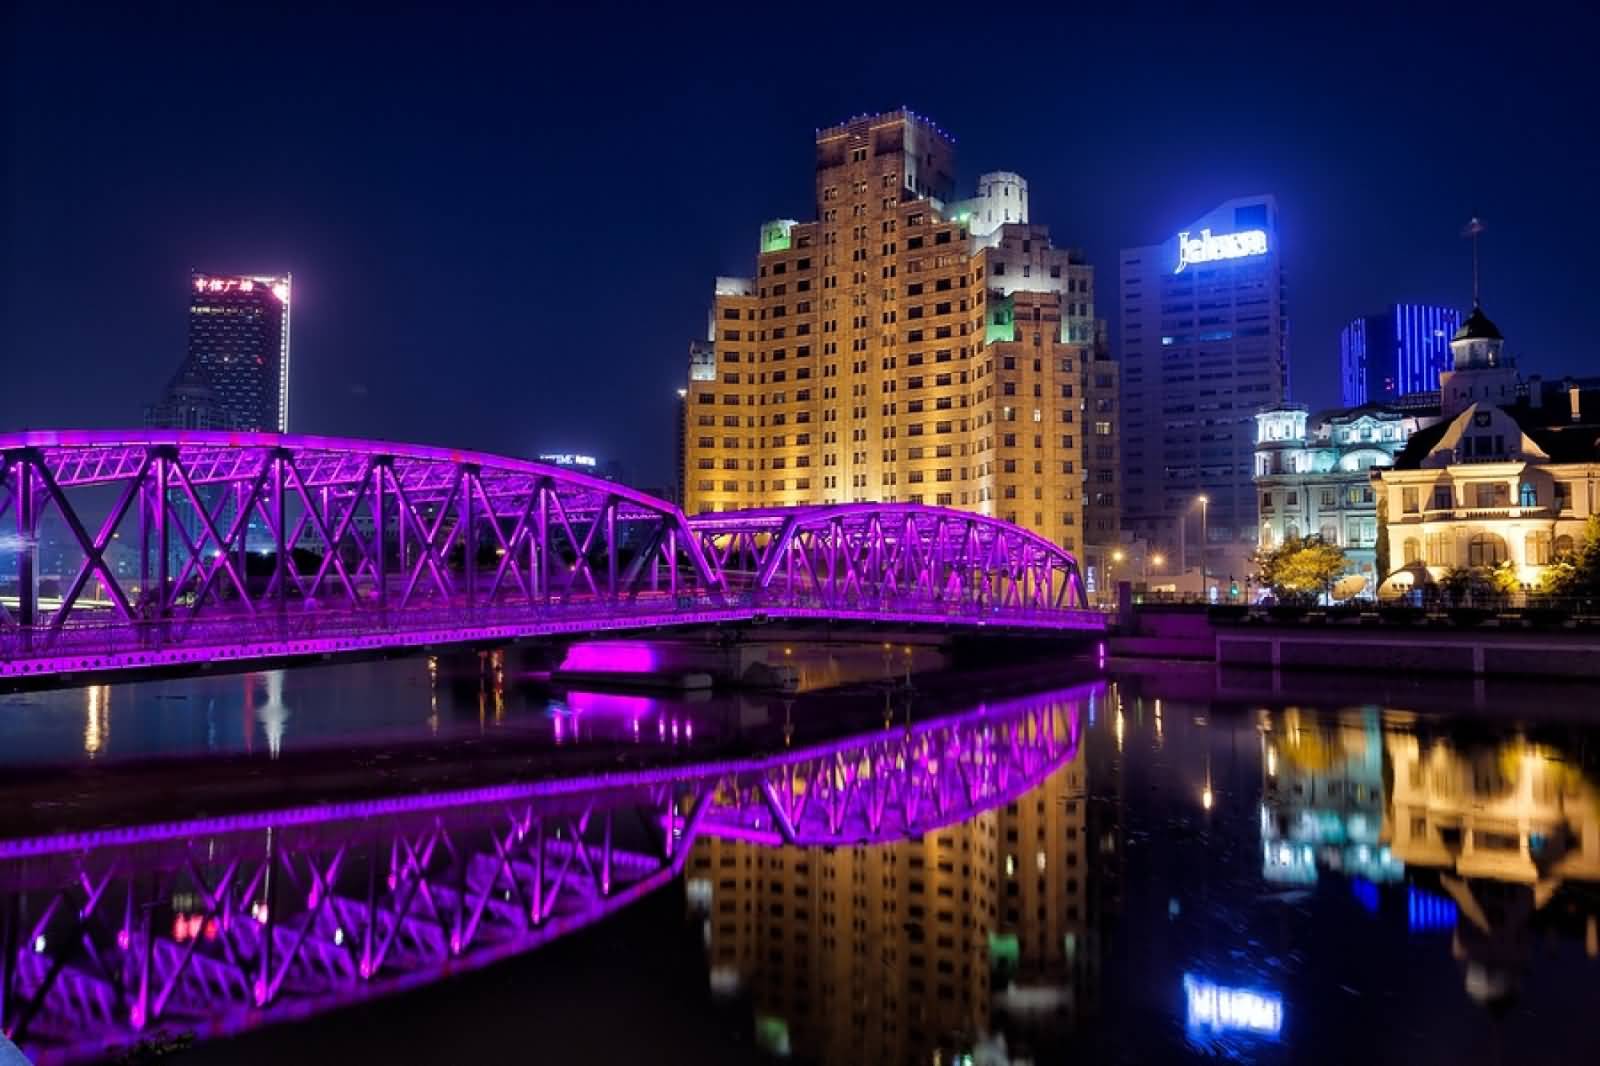 Waibaidu Bridge At Night With Pink Lights